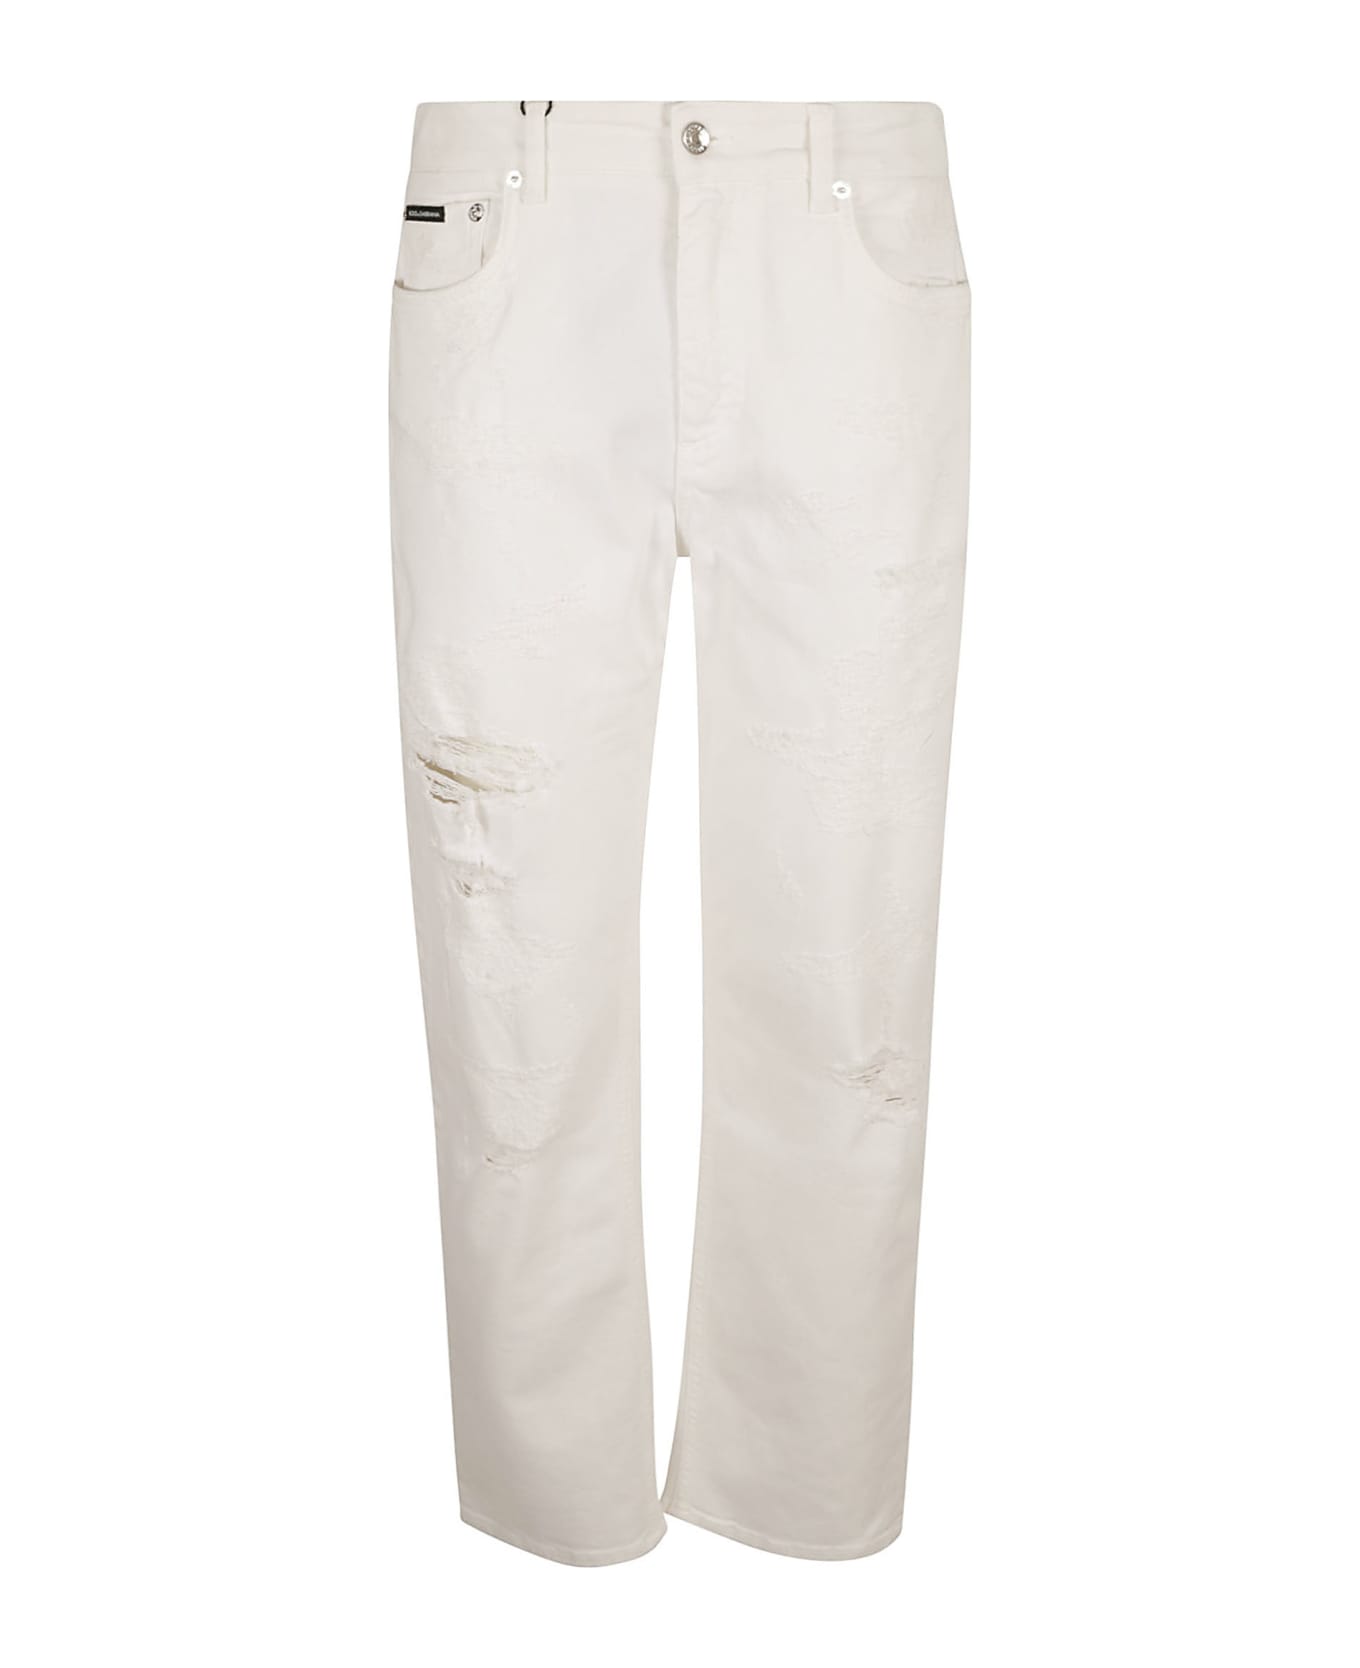 Dolce & Gabbana Distressed Effect 5 Pockets Jeans - VARIANTE ABBINATA ボトムス